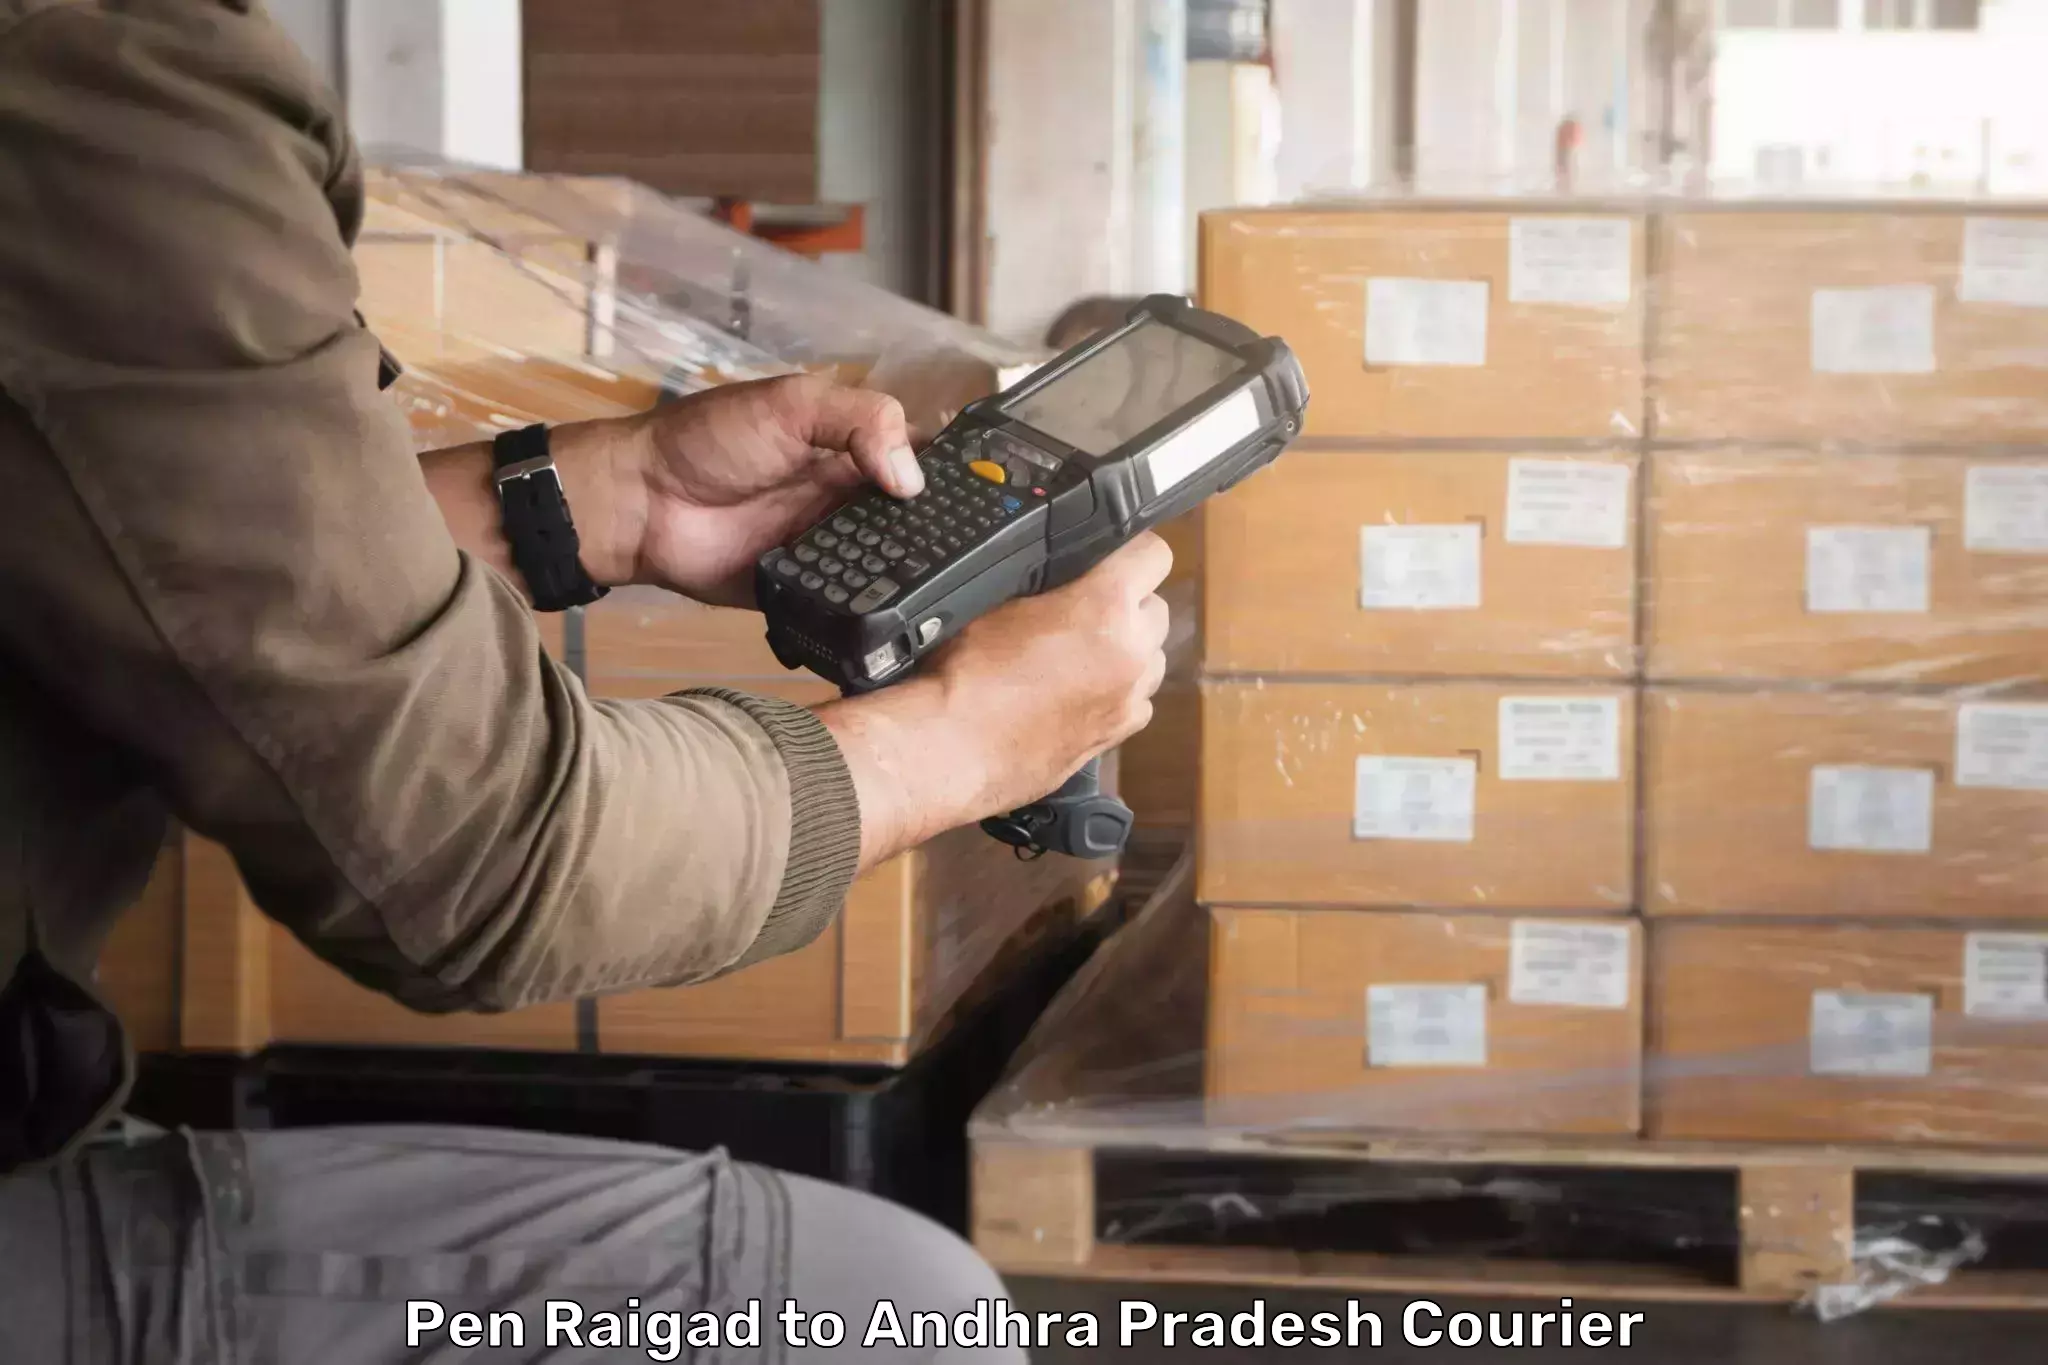 Urban courier service Pen Raigad to Polavaram